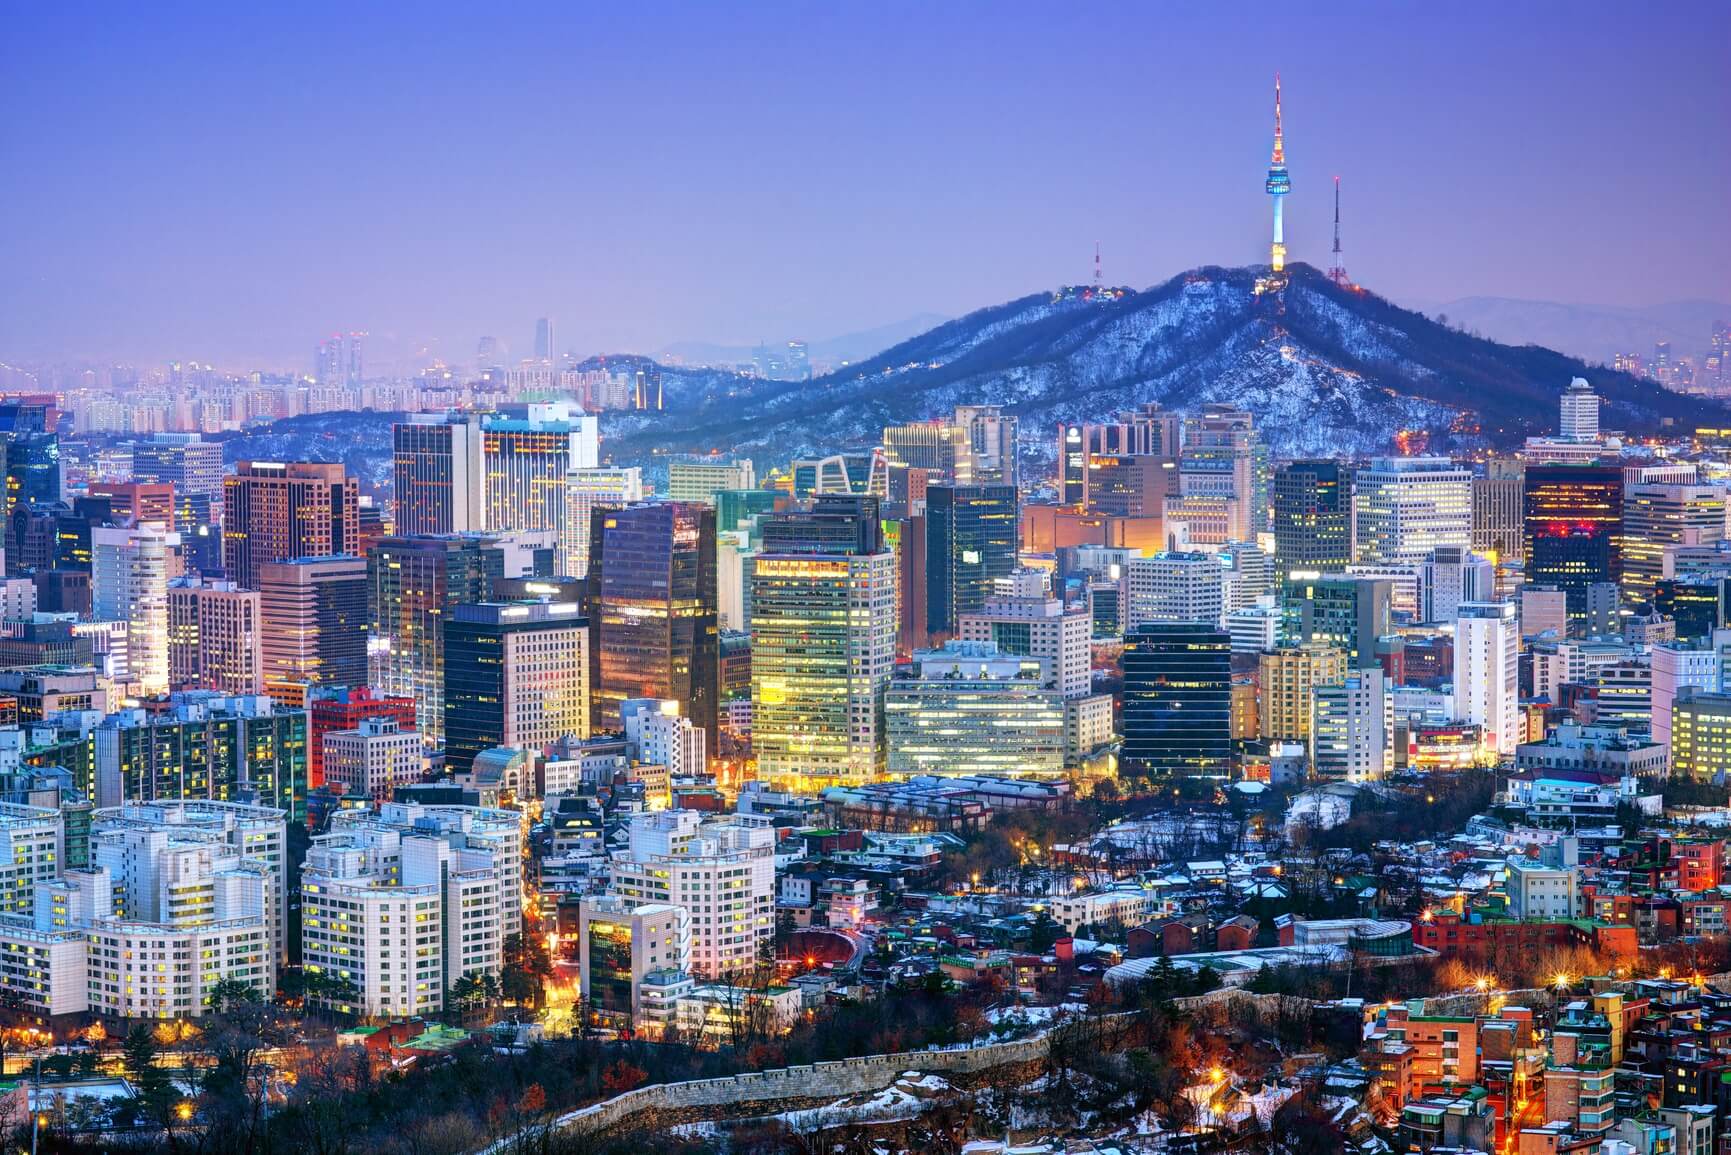 Flight deals from Prague, Czech Republic to Seoul, South Korea | Secret Flying